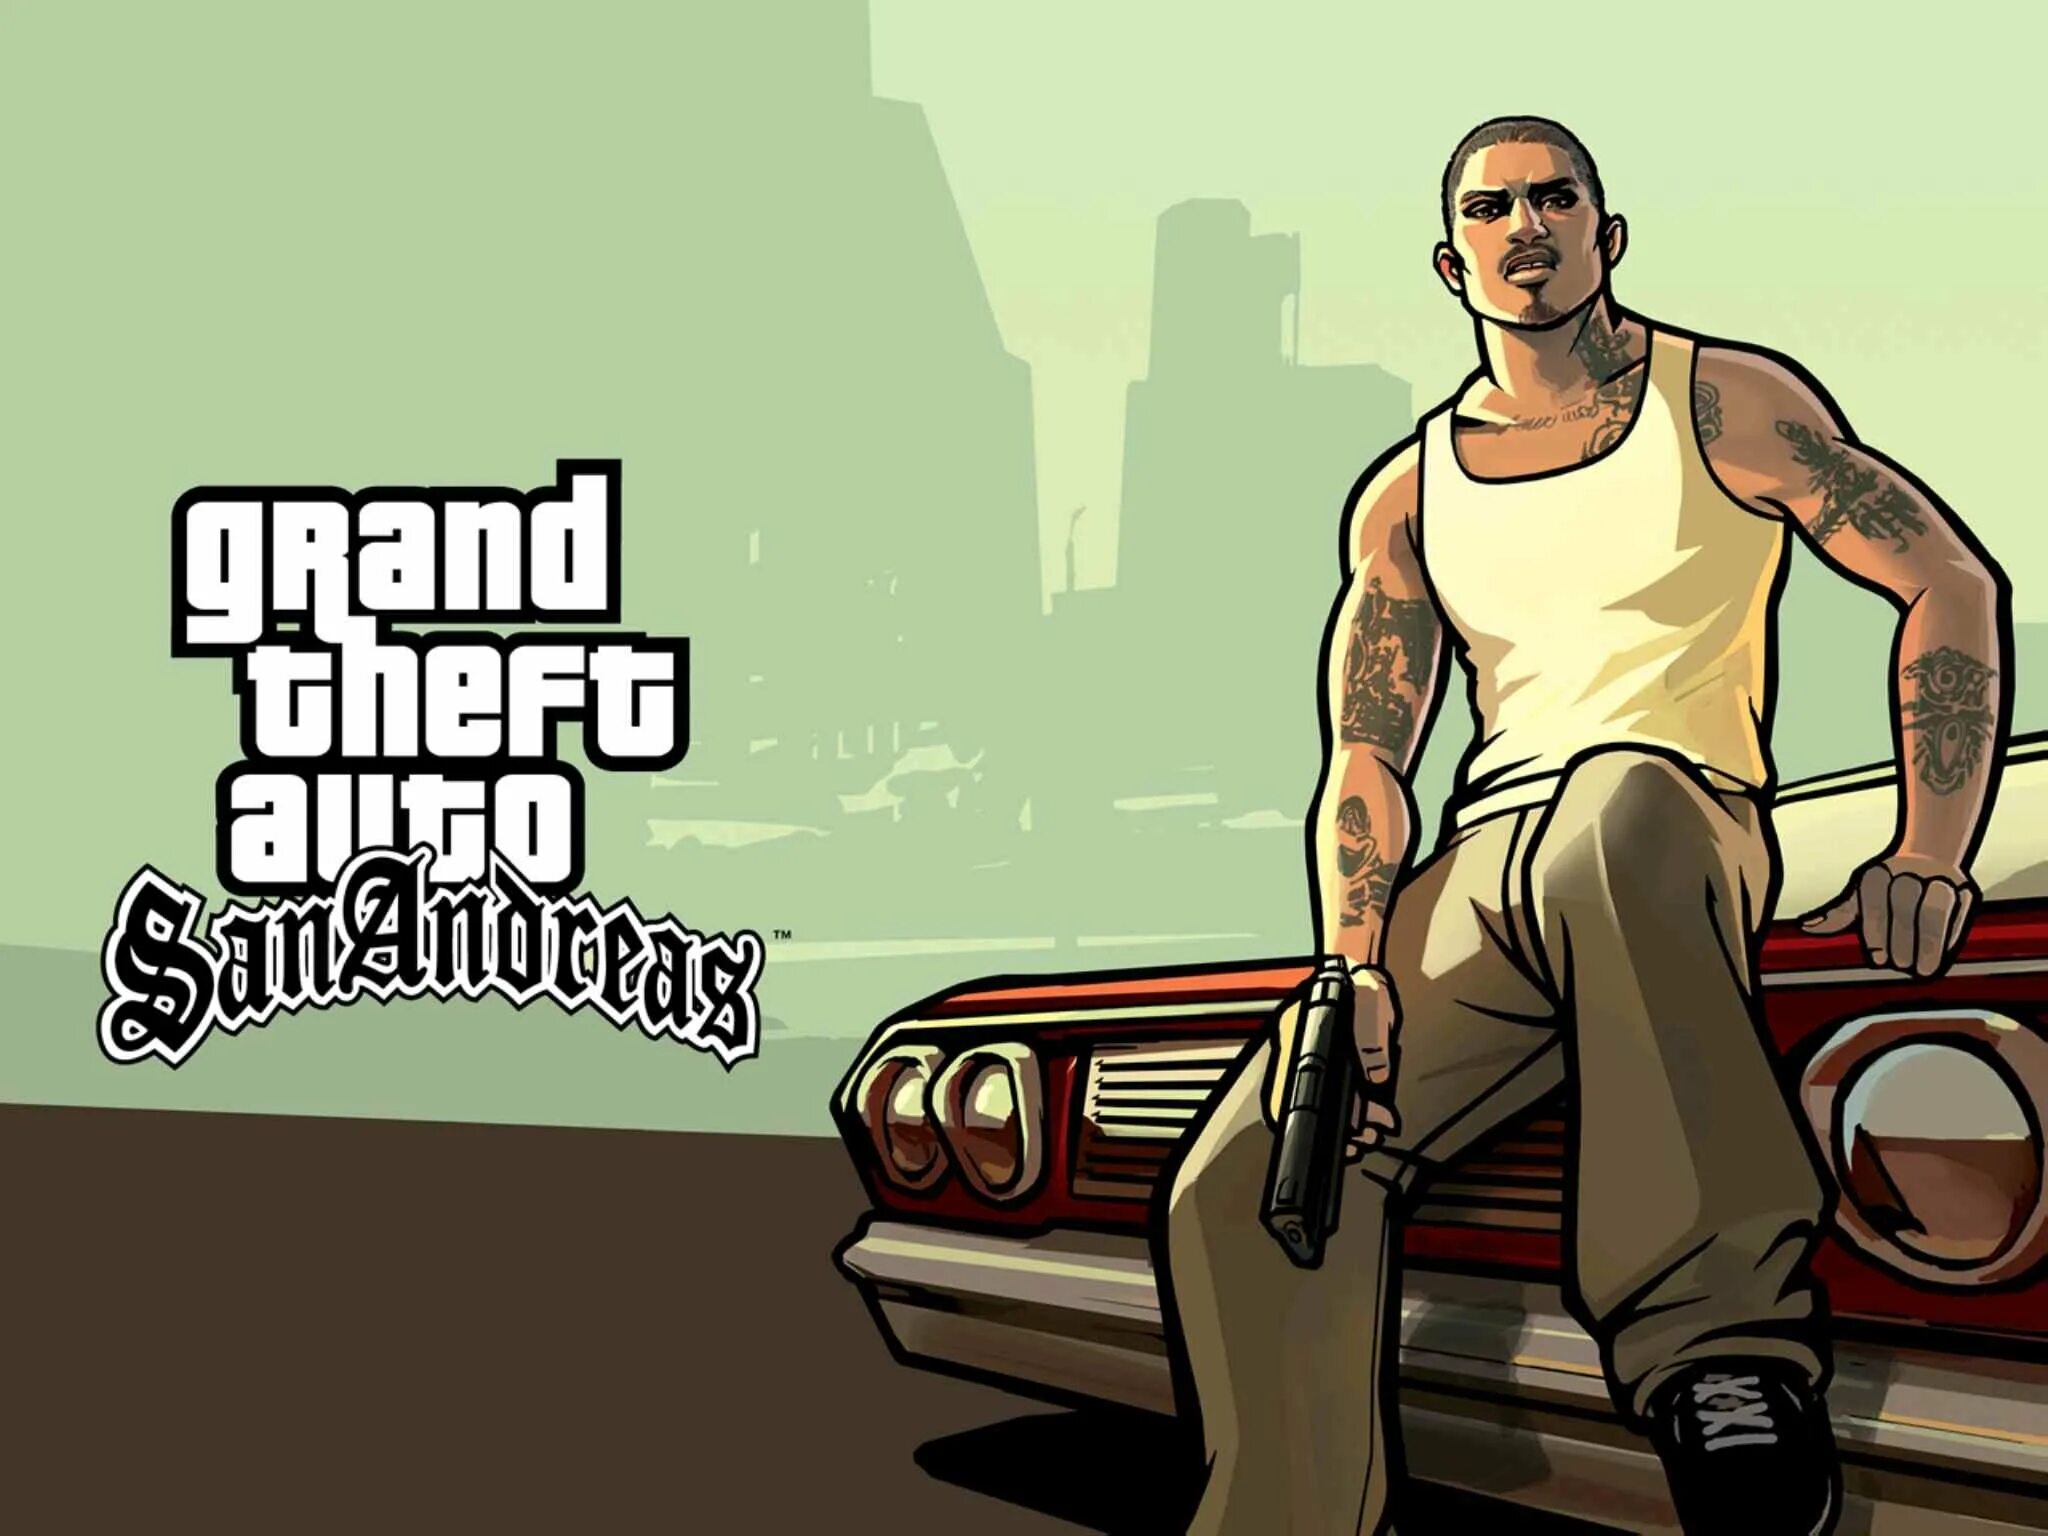 San andreas com. Grand Theft auto: San Andreas. Картинки ГТА Сан андреас. Заставка ГТА са. Рисунки ГТА Сан андреас.